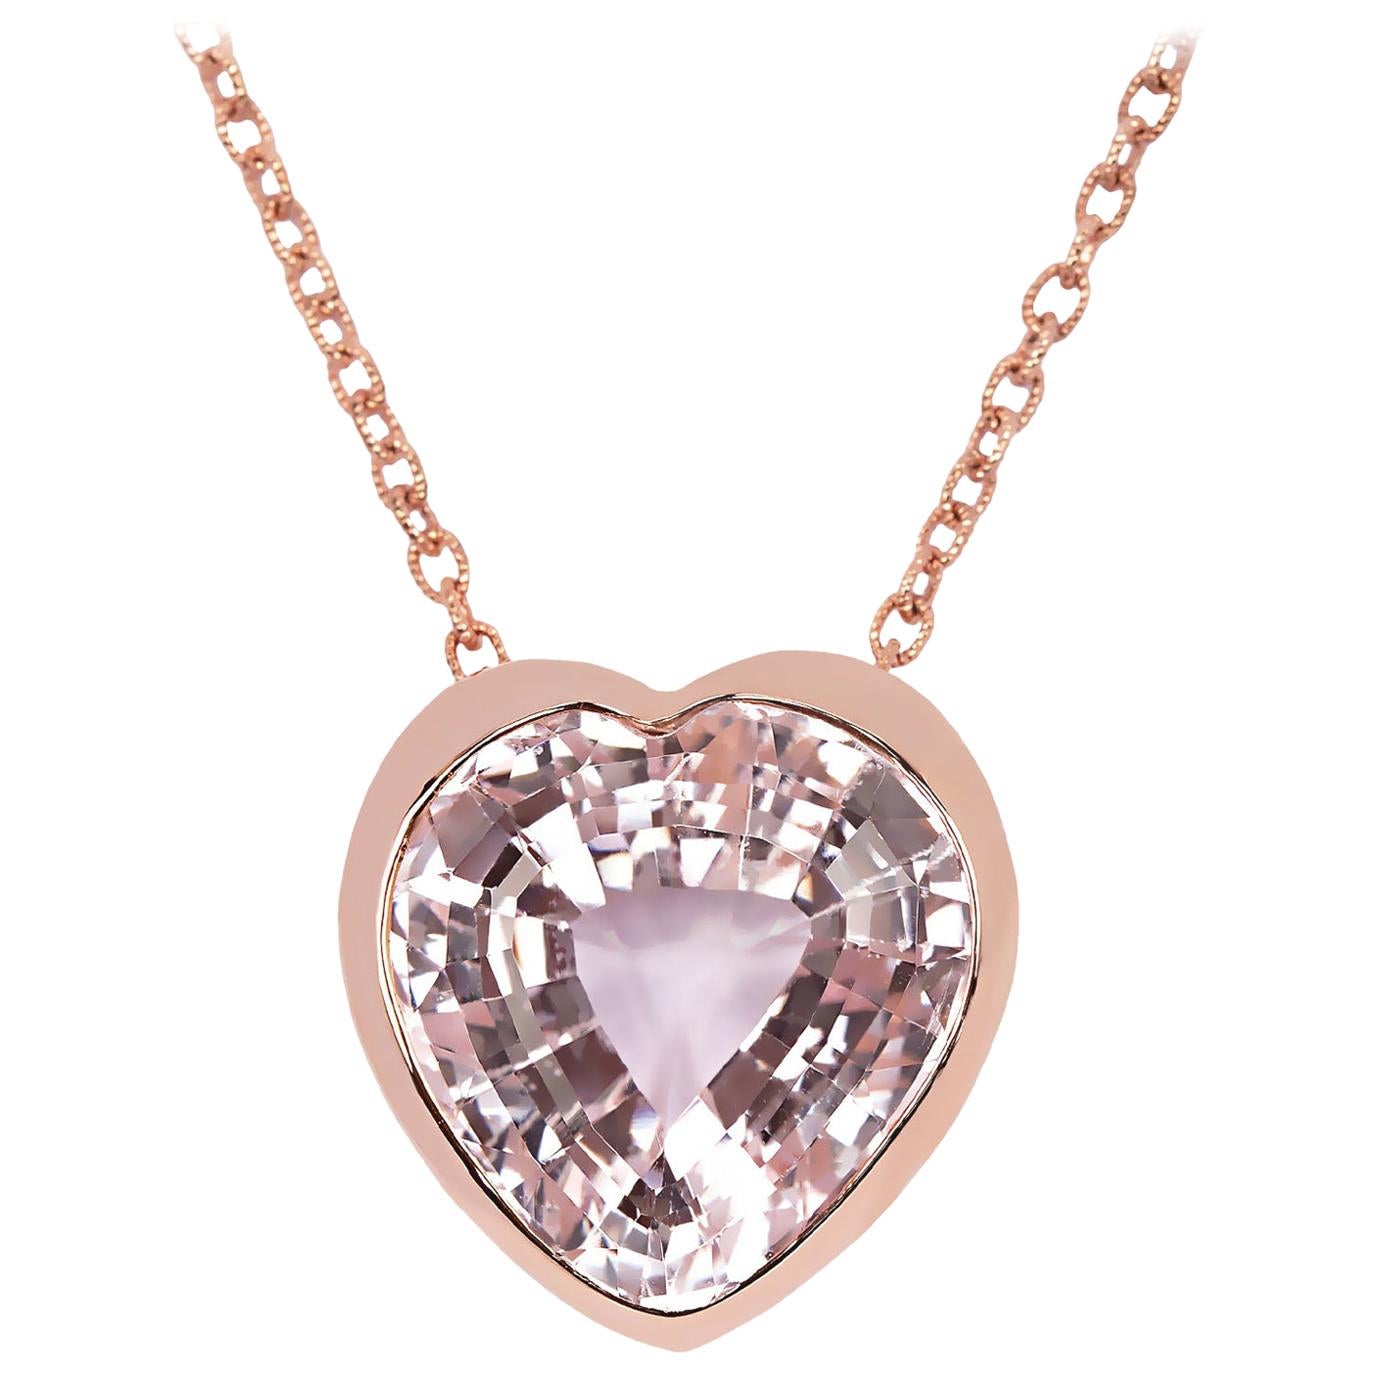 Heart Shaped Kunzite 30.86 Carat Rose Gold Necklace